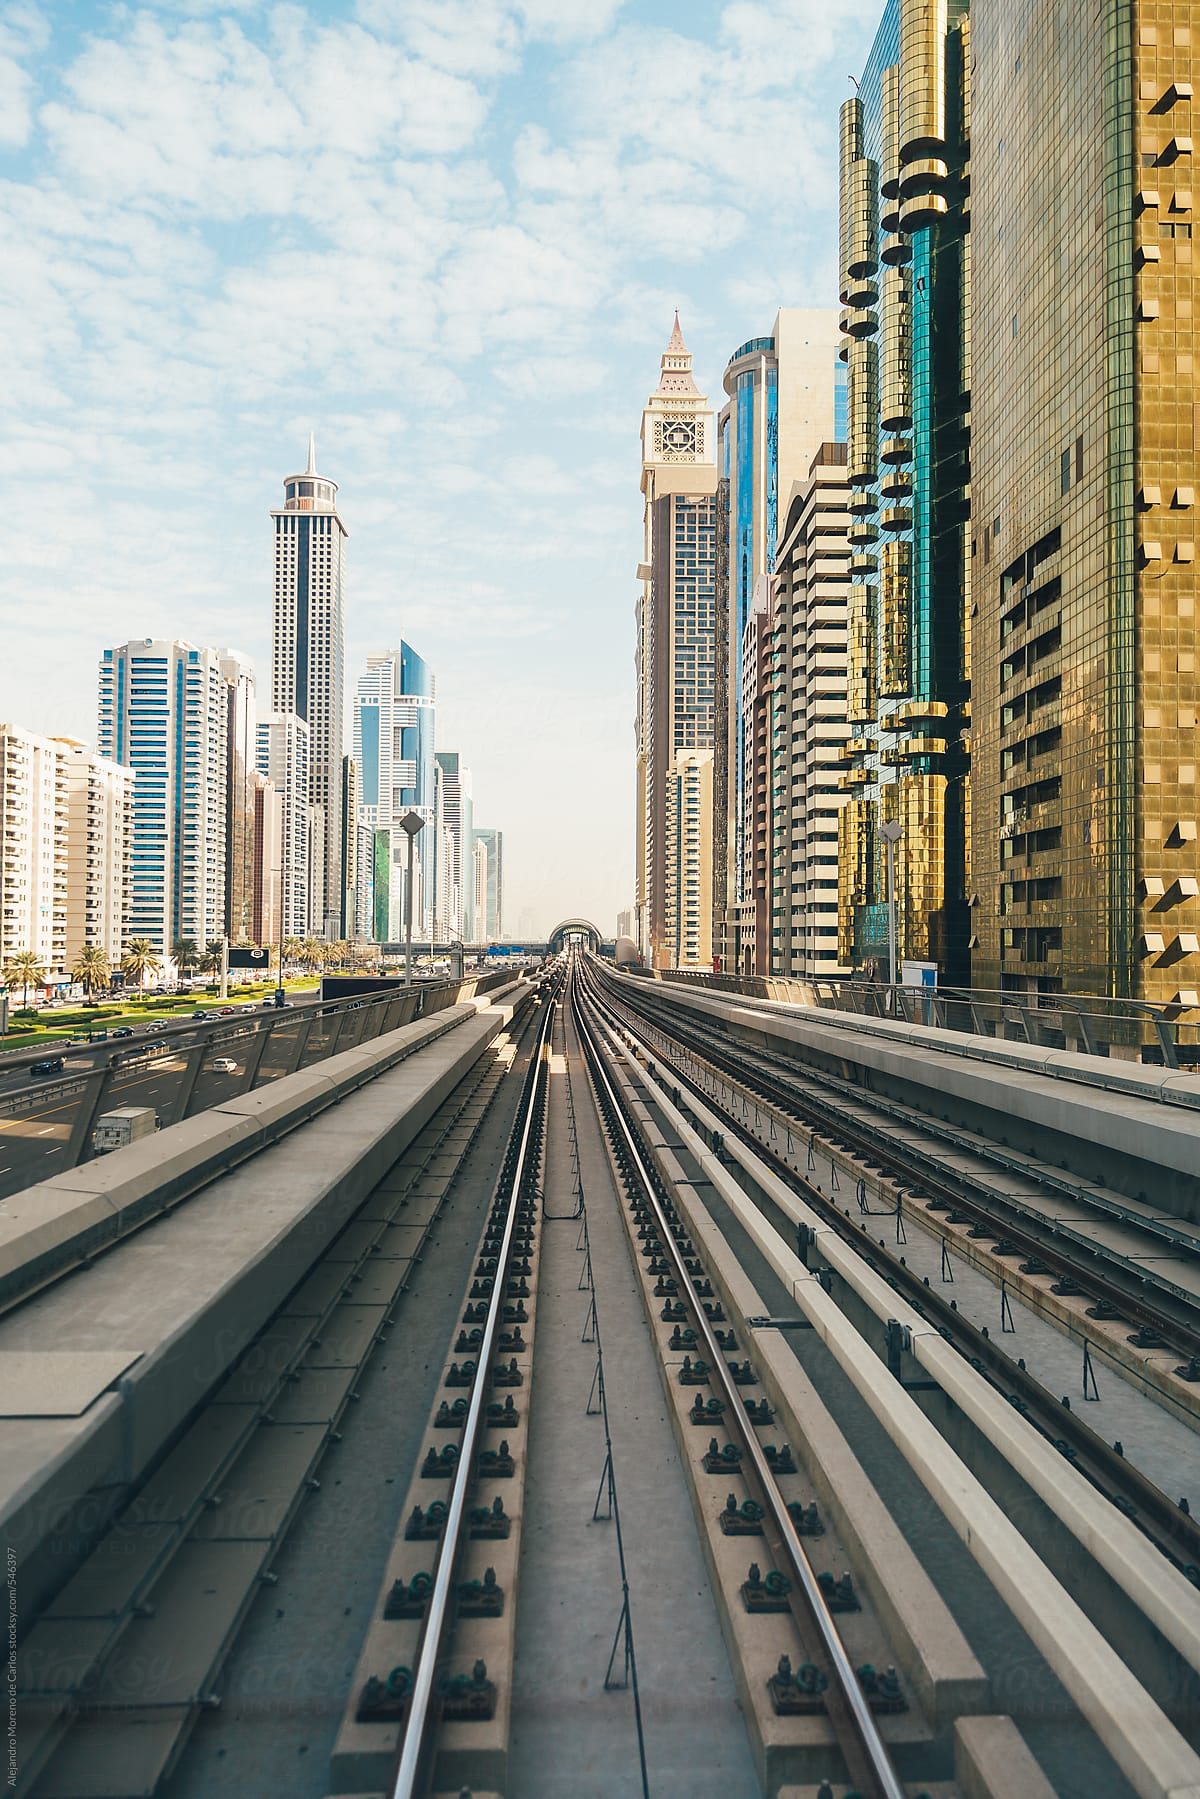 Railway and city buildings view in Dubai metro rail network. Dubai, United Arab Emirates